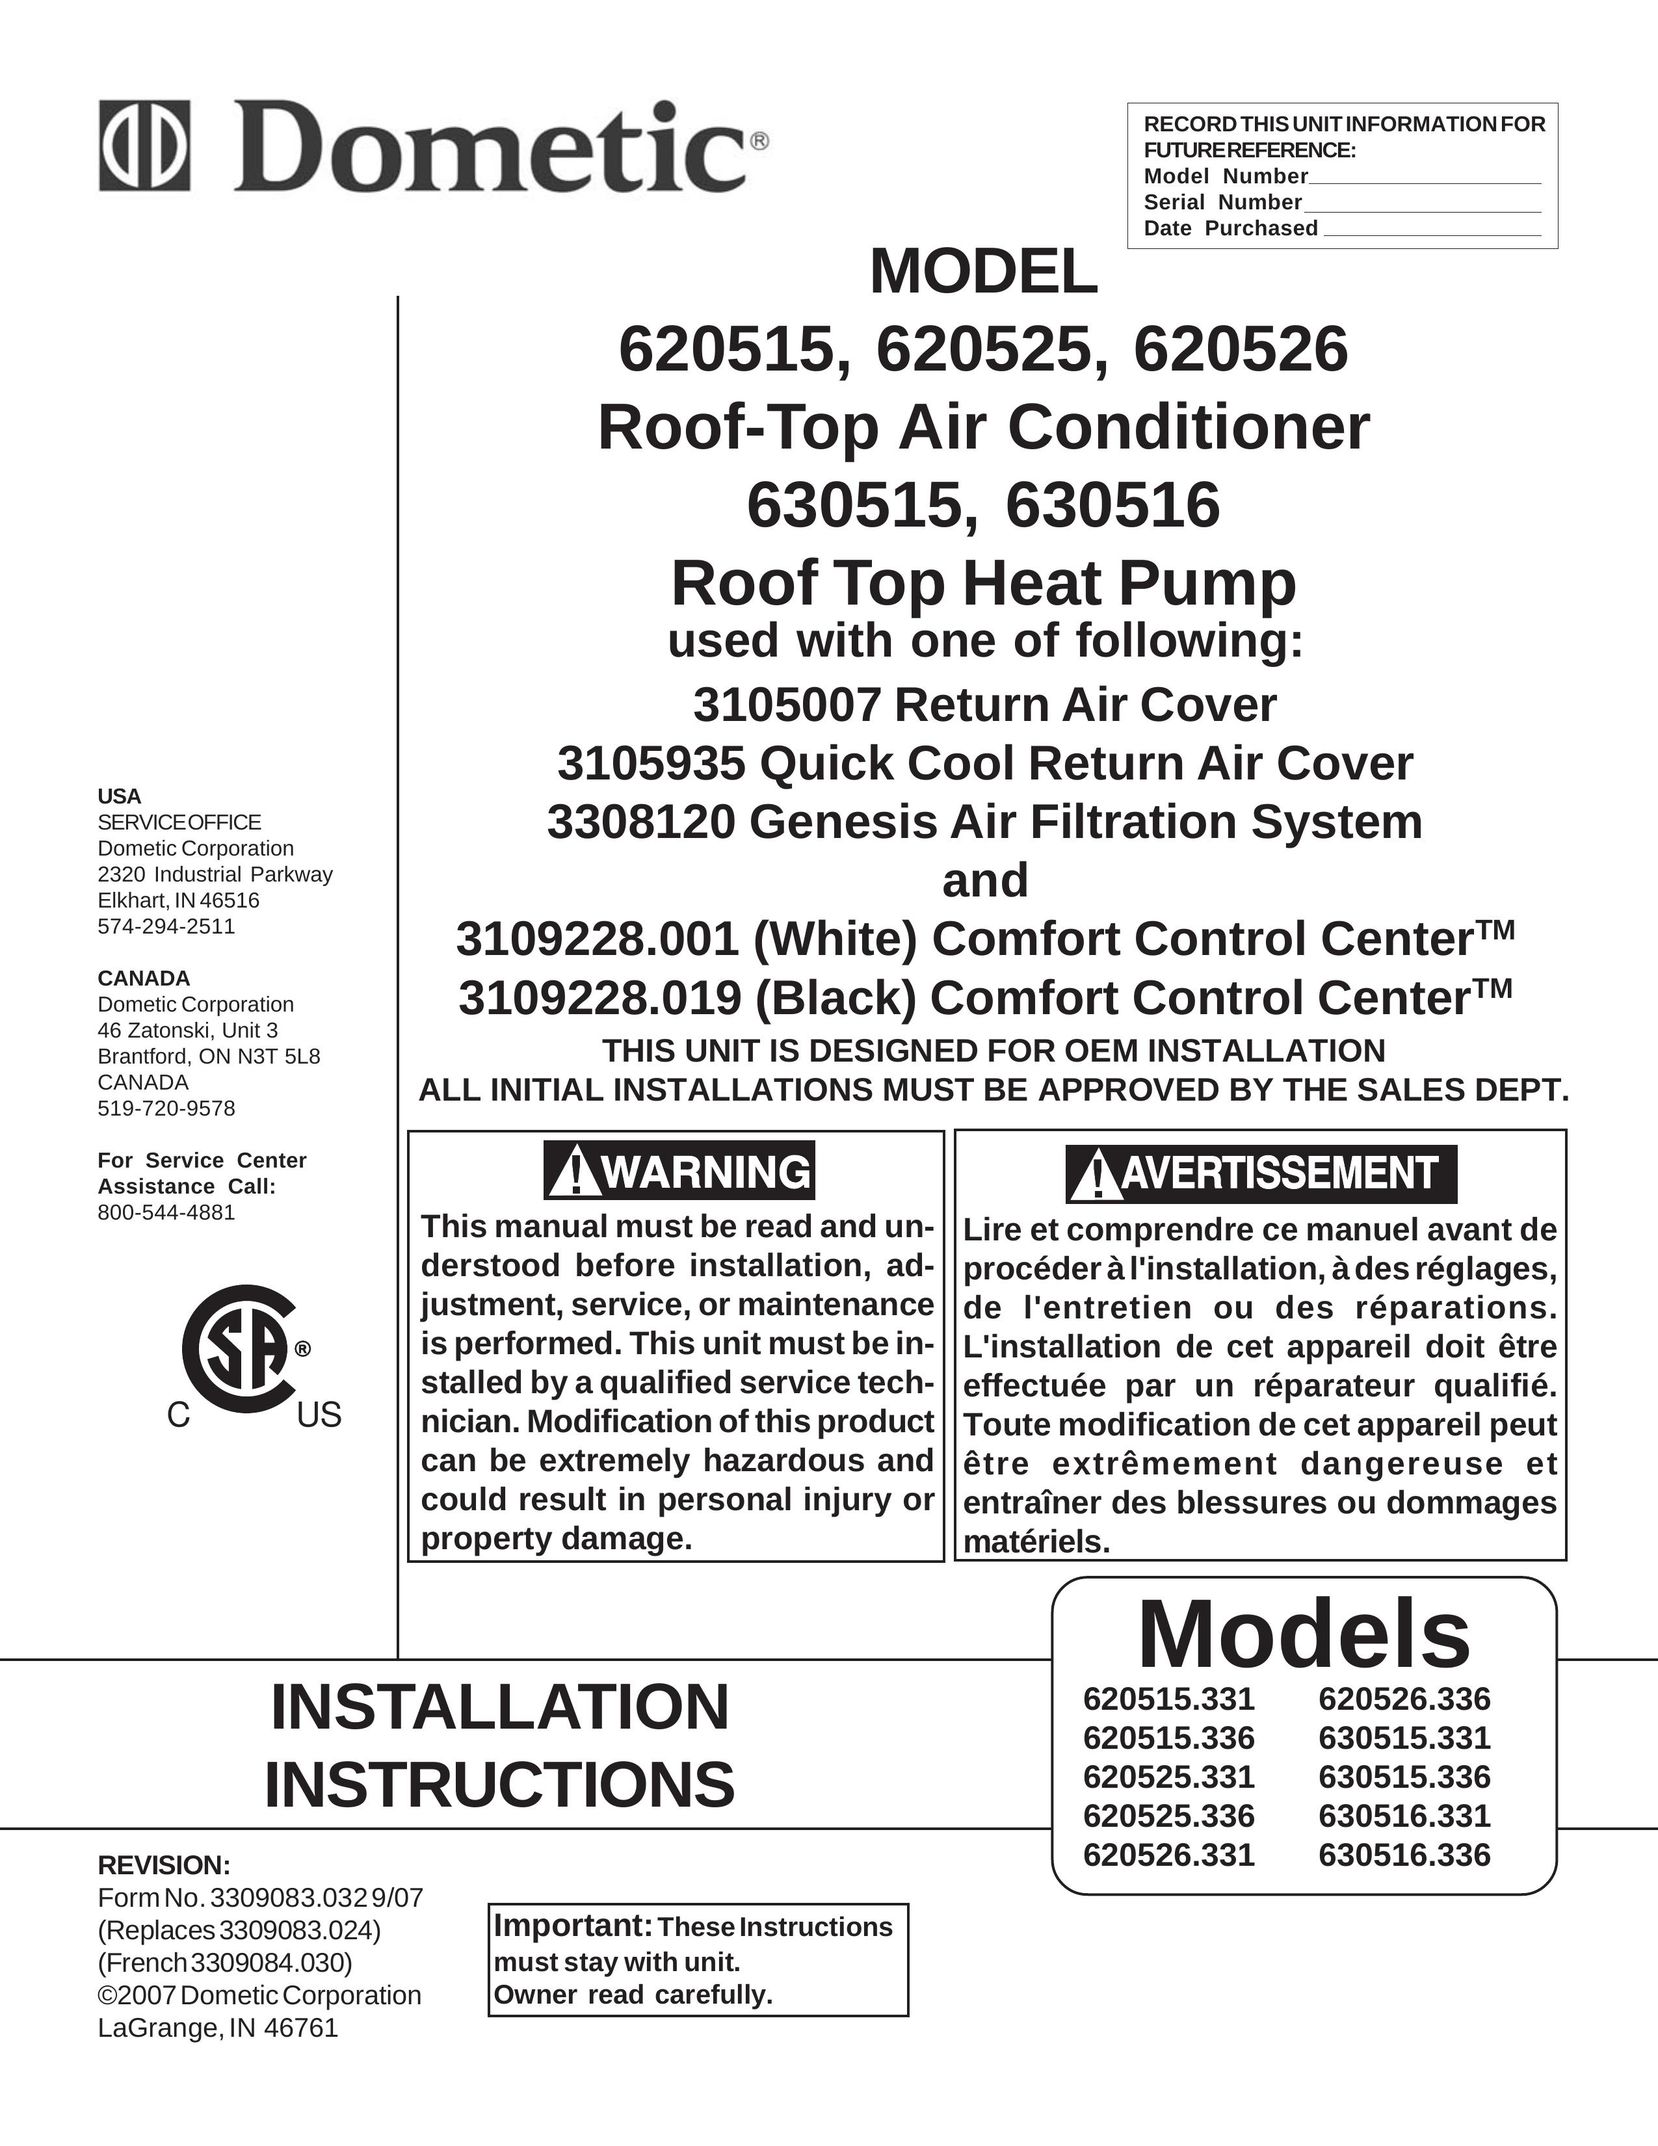 Dometic 630516.336 Air Conditioner User Manual